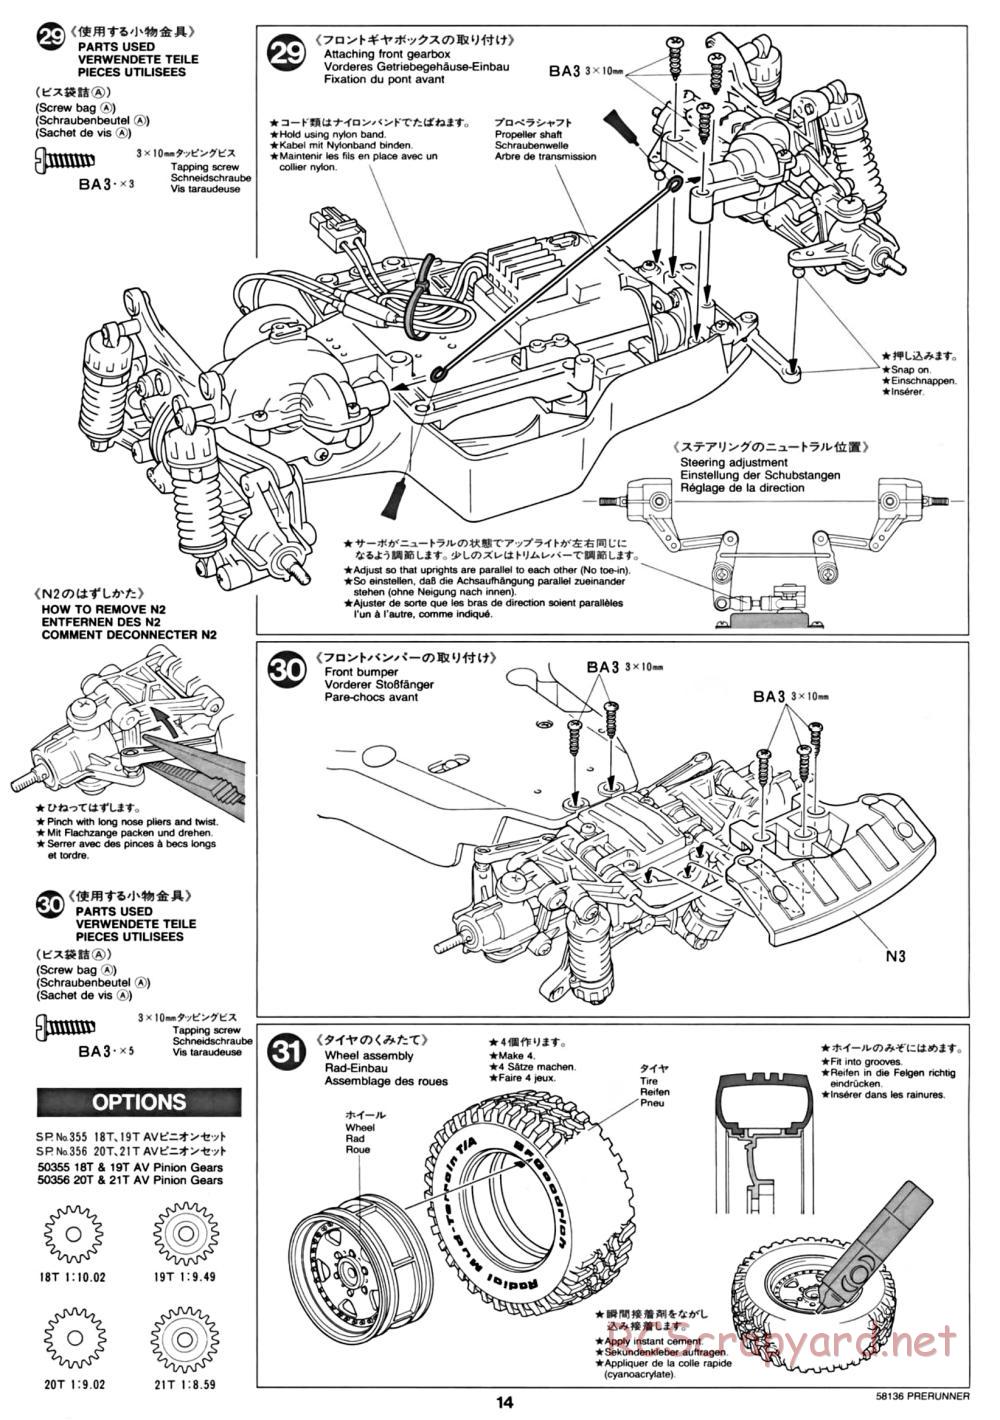 Tamiya - Toyota Prerunner Chassis - Manual - Page 14